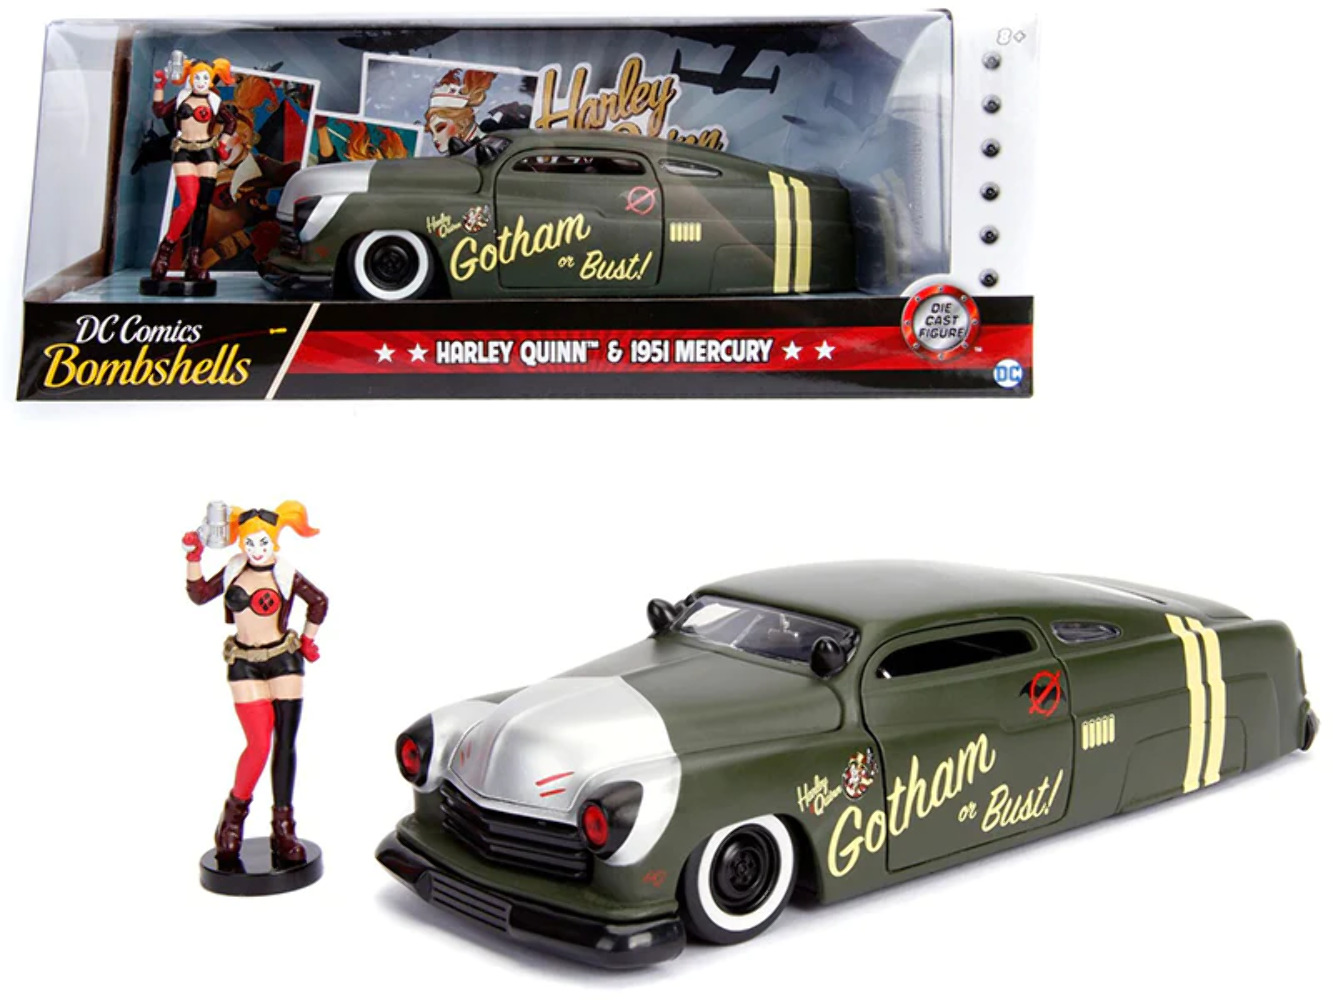 1951 Mercury Harley Quinn Diecast Figurine DC Comics Bombshells 1/24 Model Car